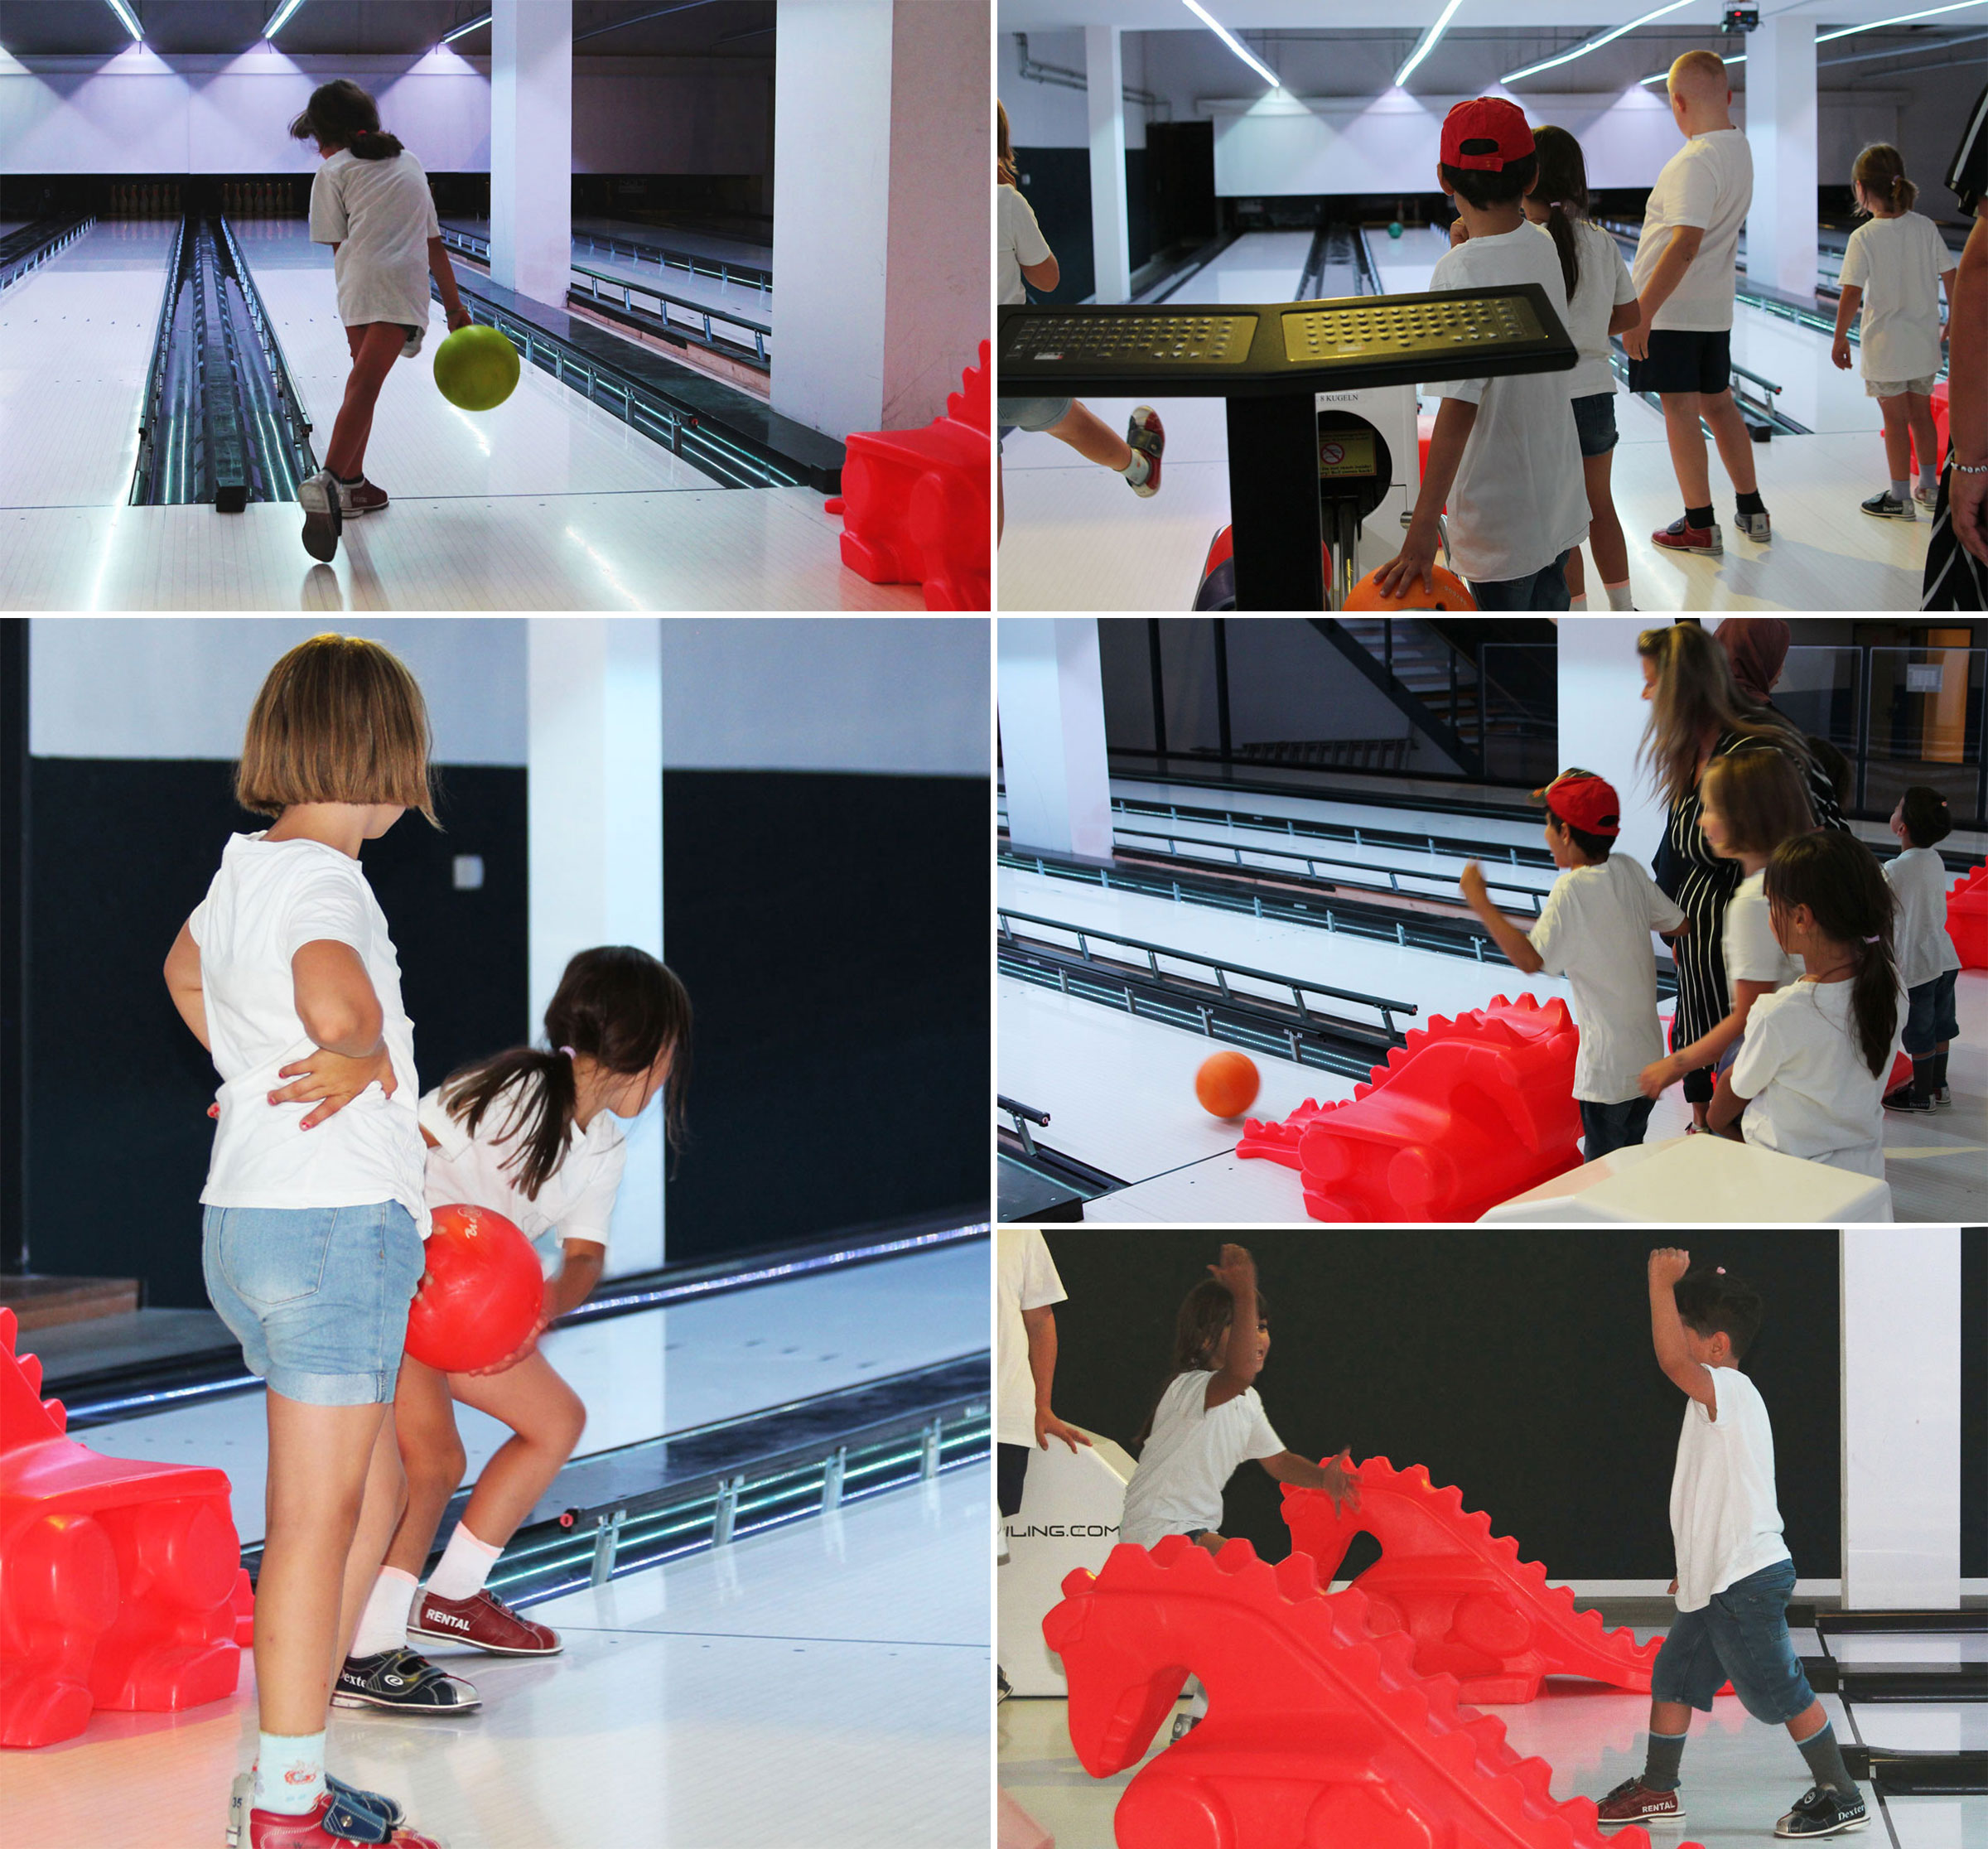 The kids bowling